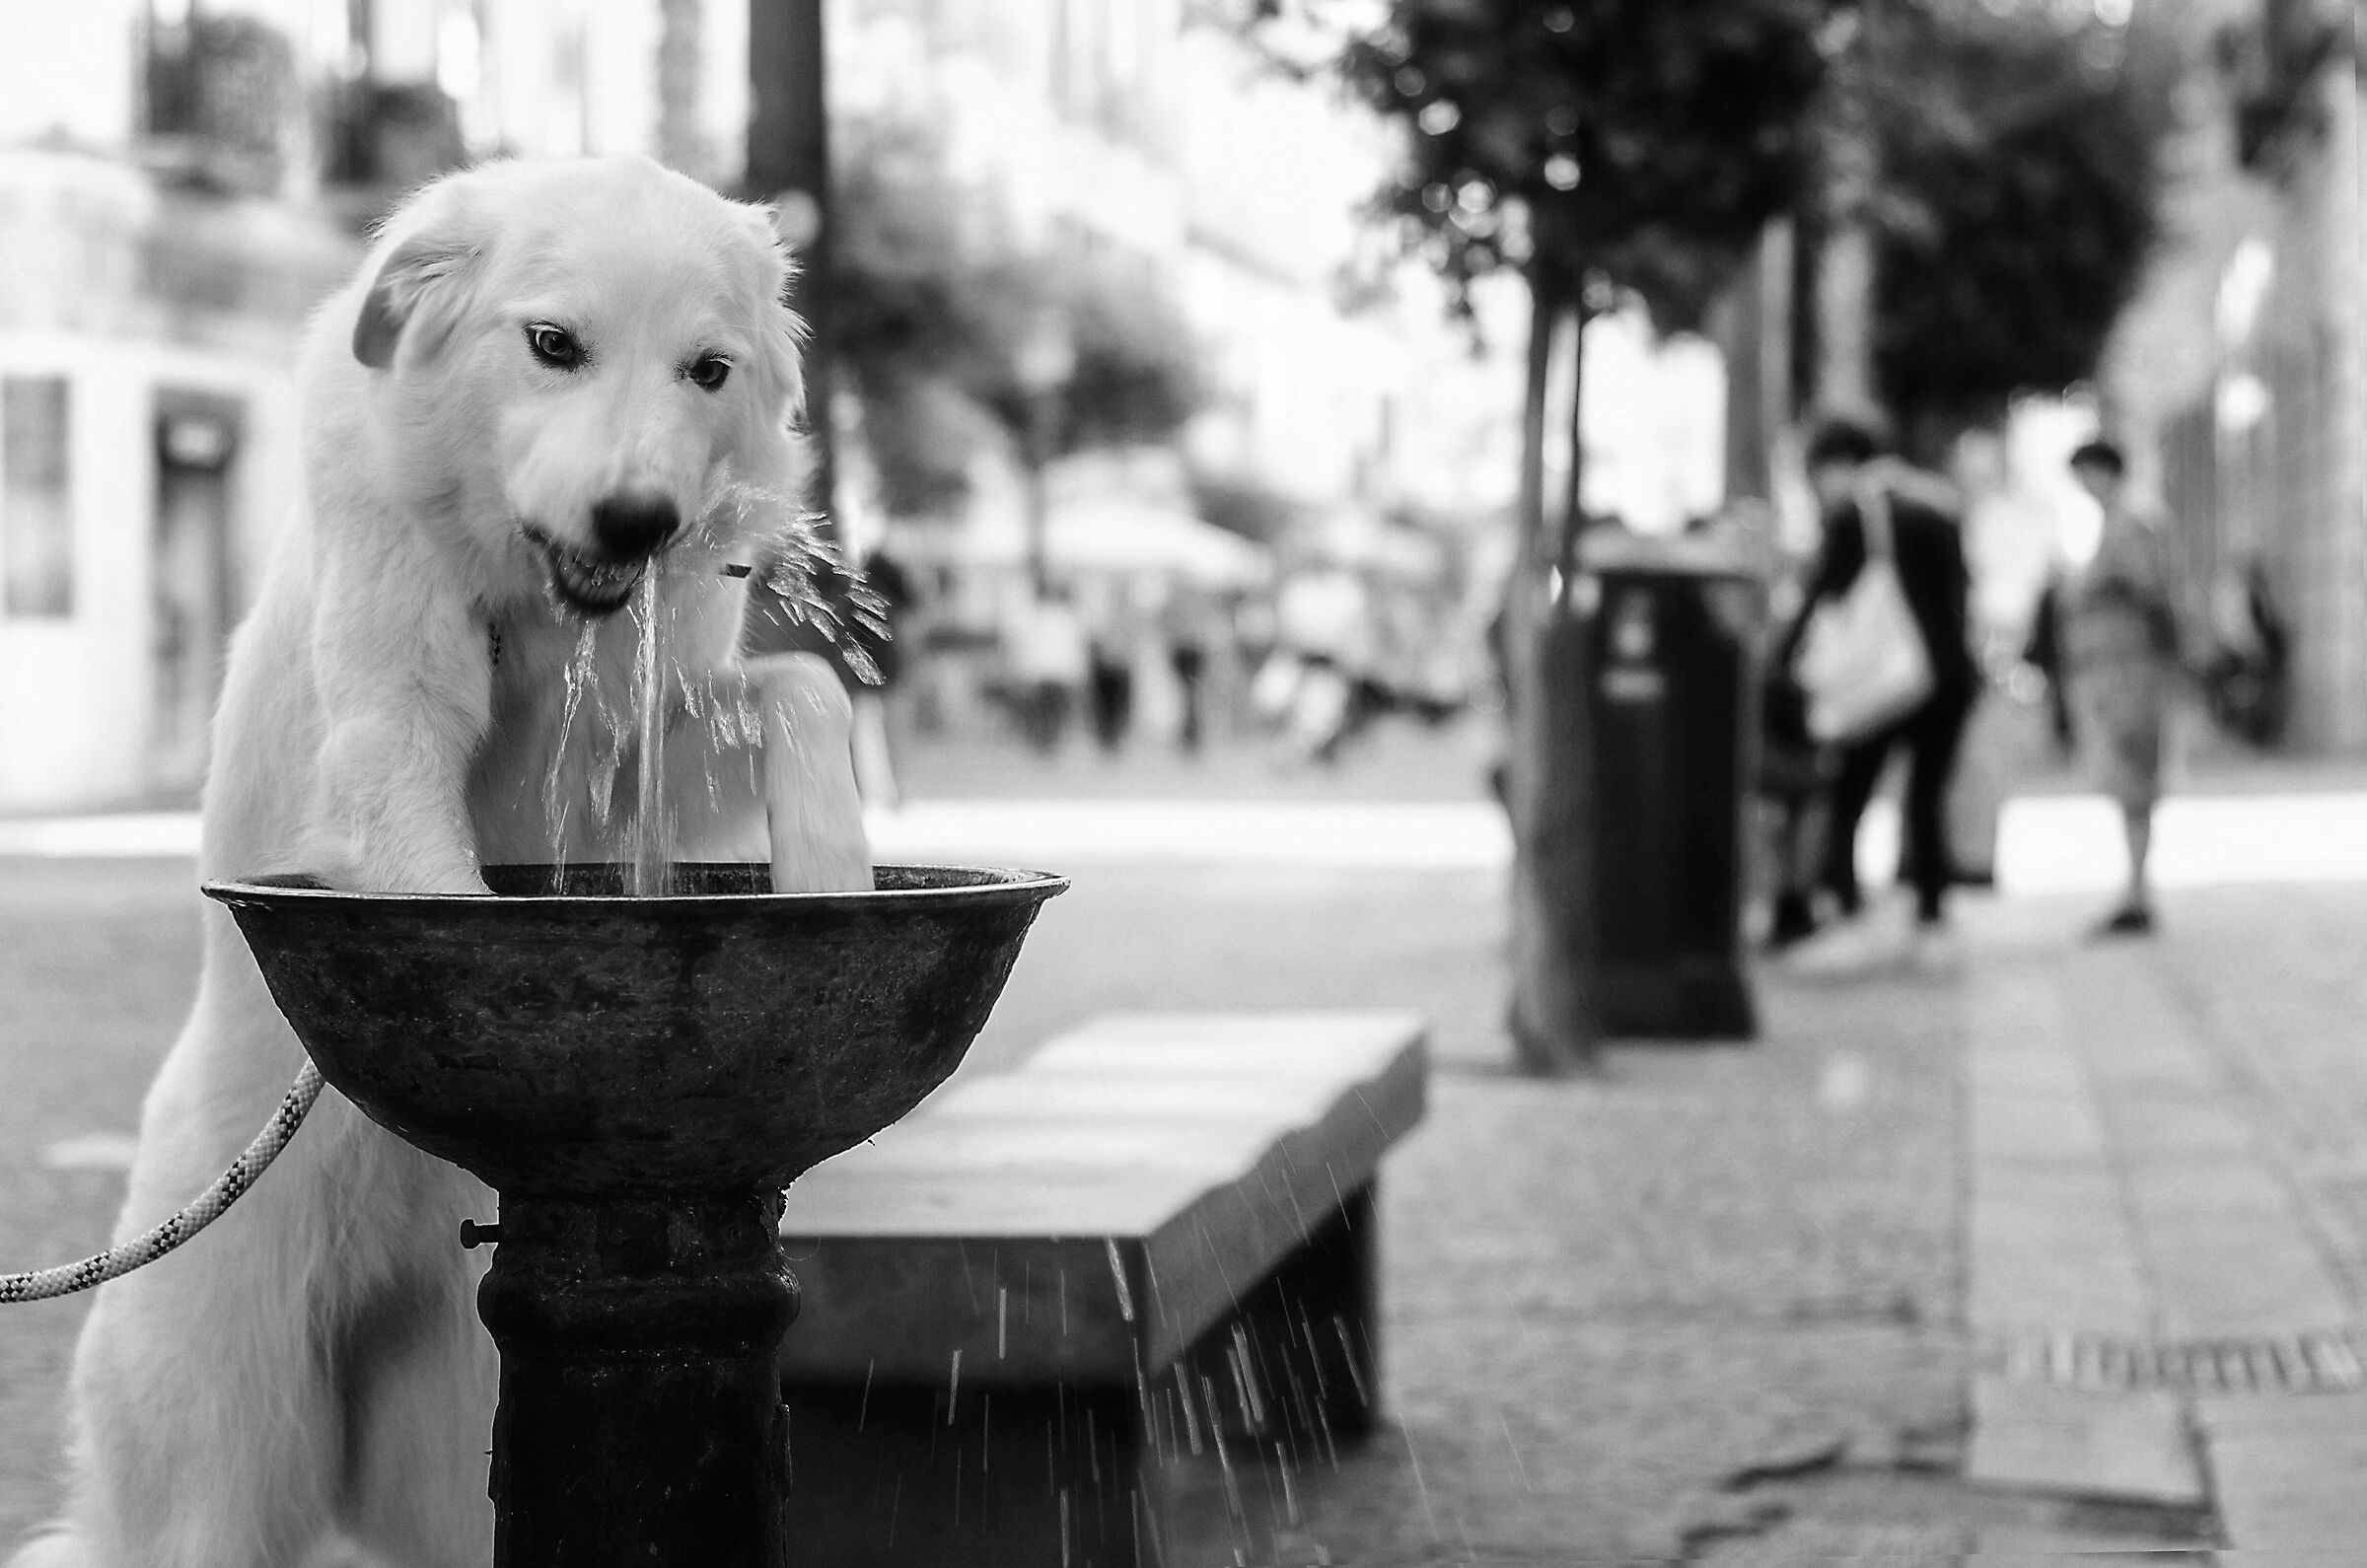 Dog street photography...